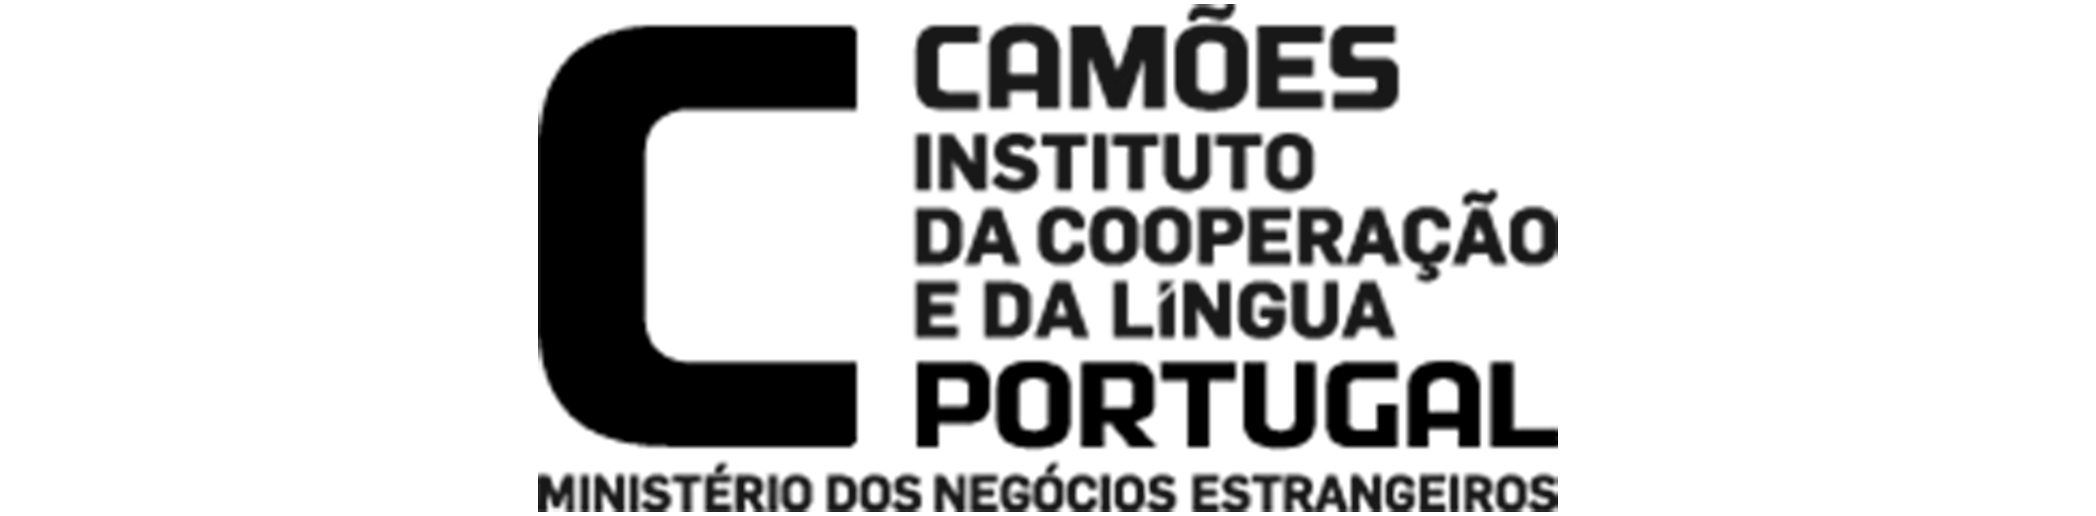 logo Camoes